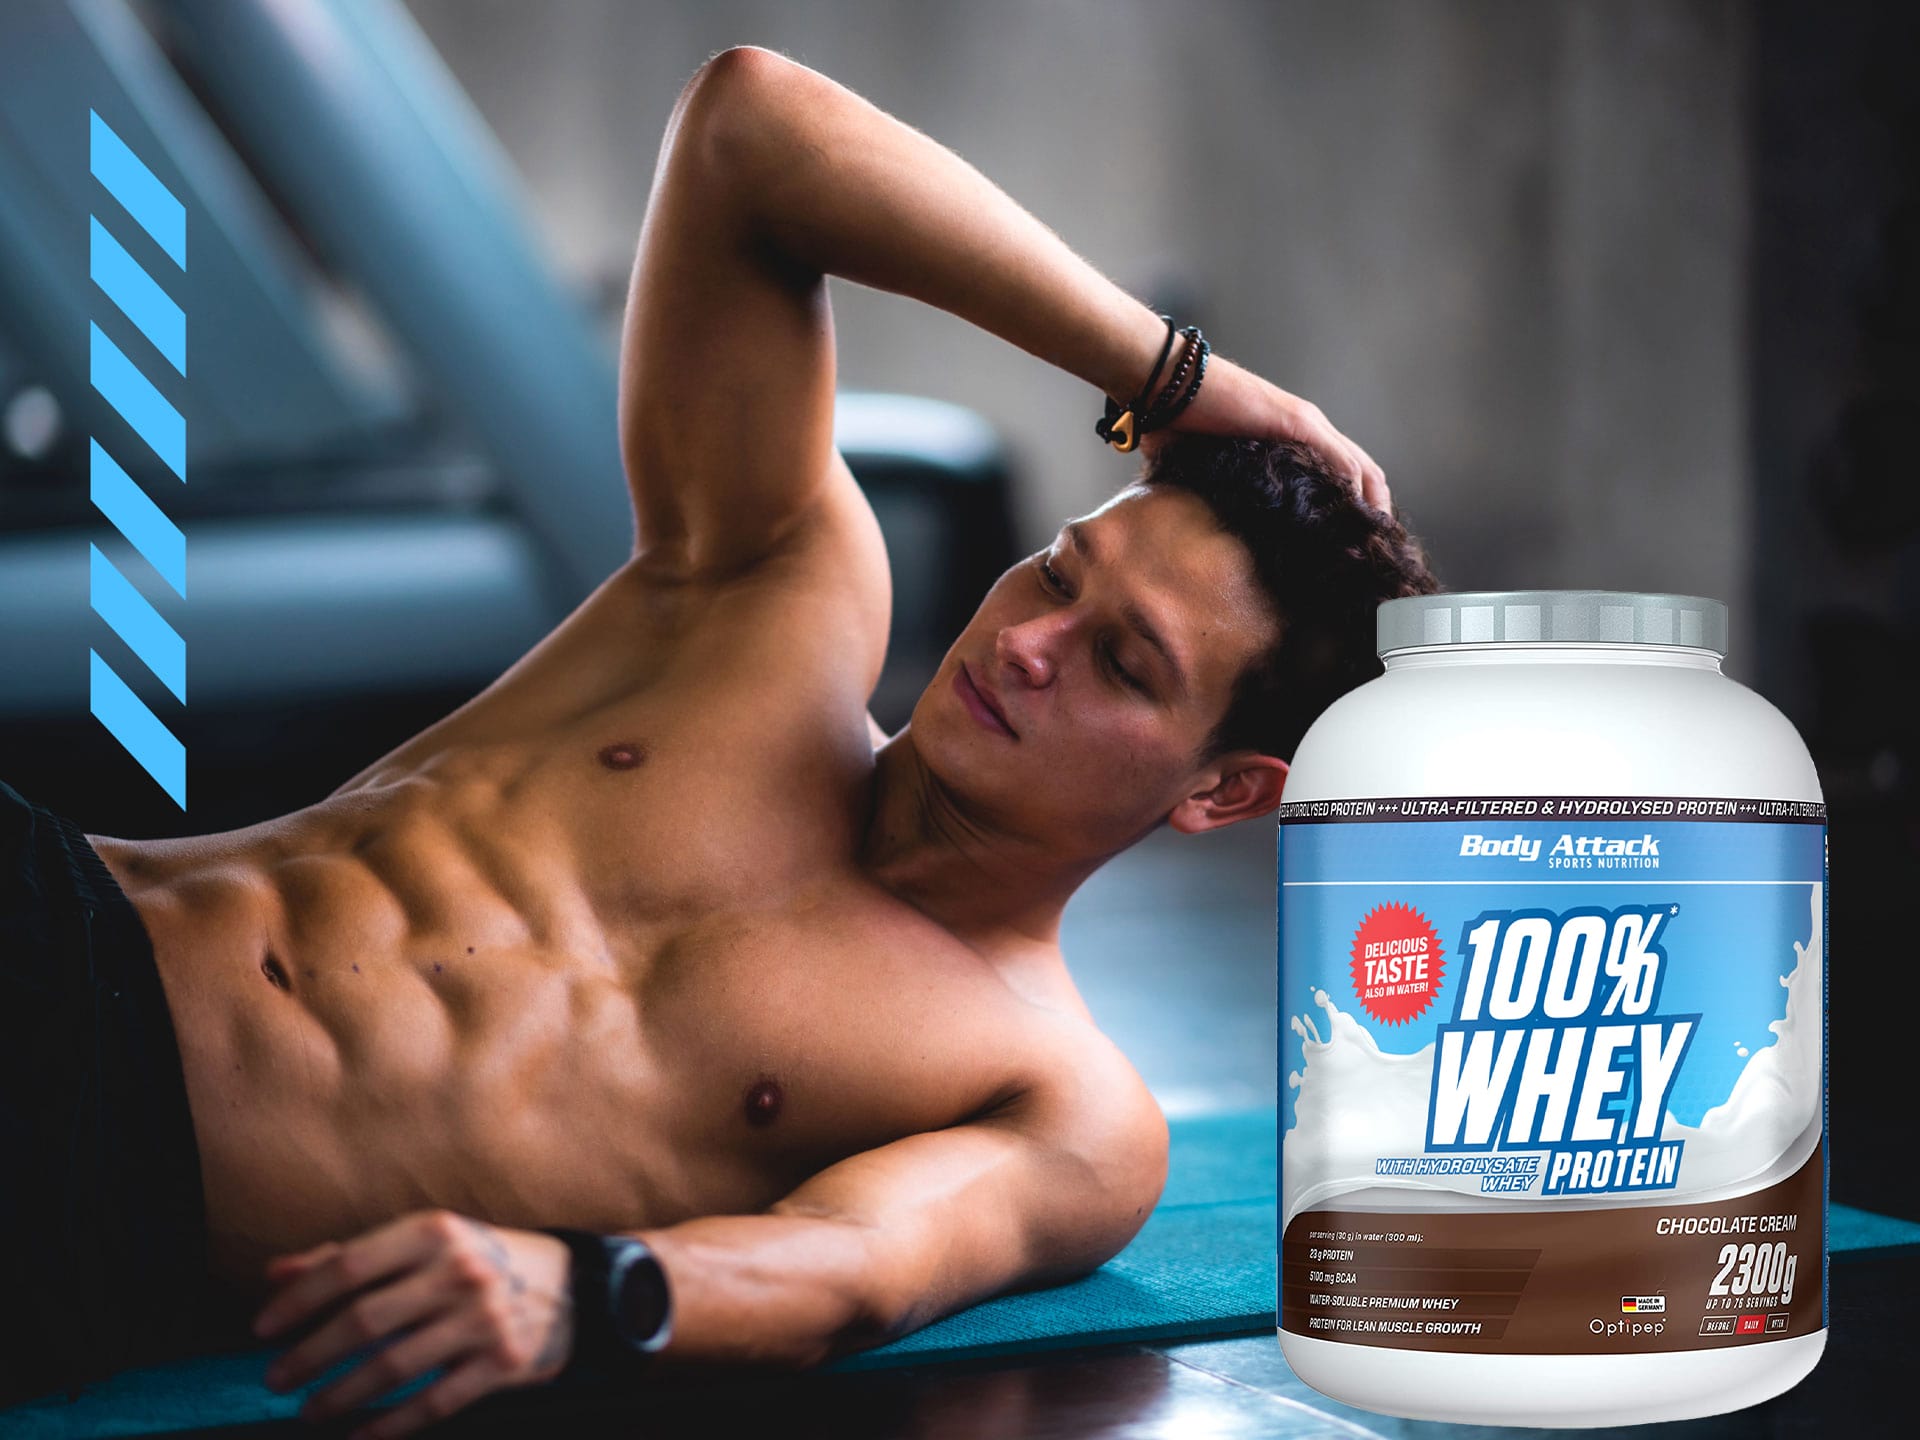 BODY ATTACK 100% Whey Protein - 900g - Vanilla WPC